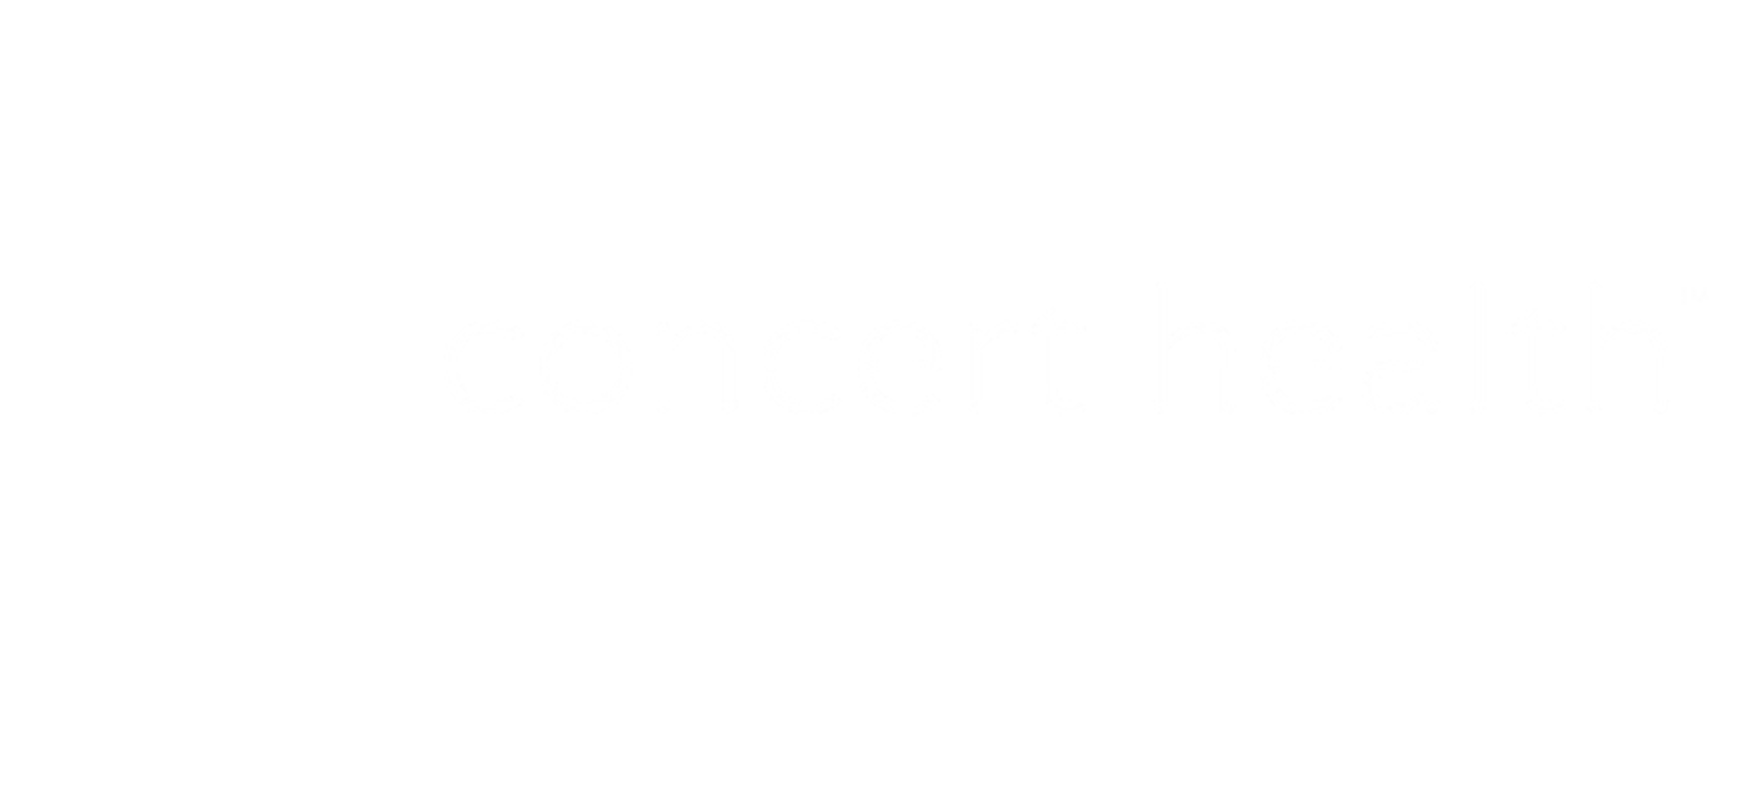 concert health logo